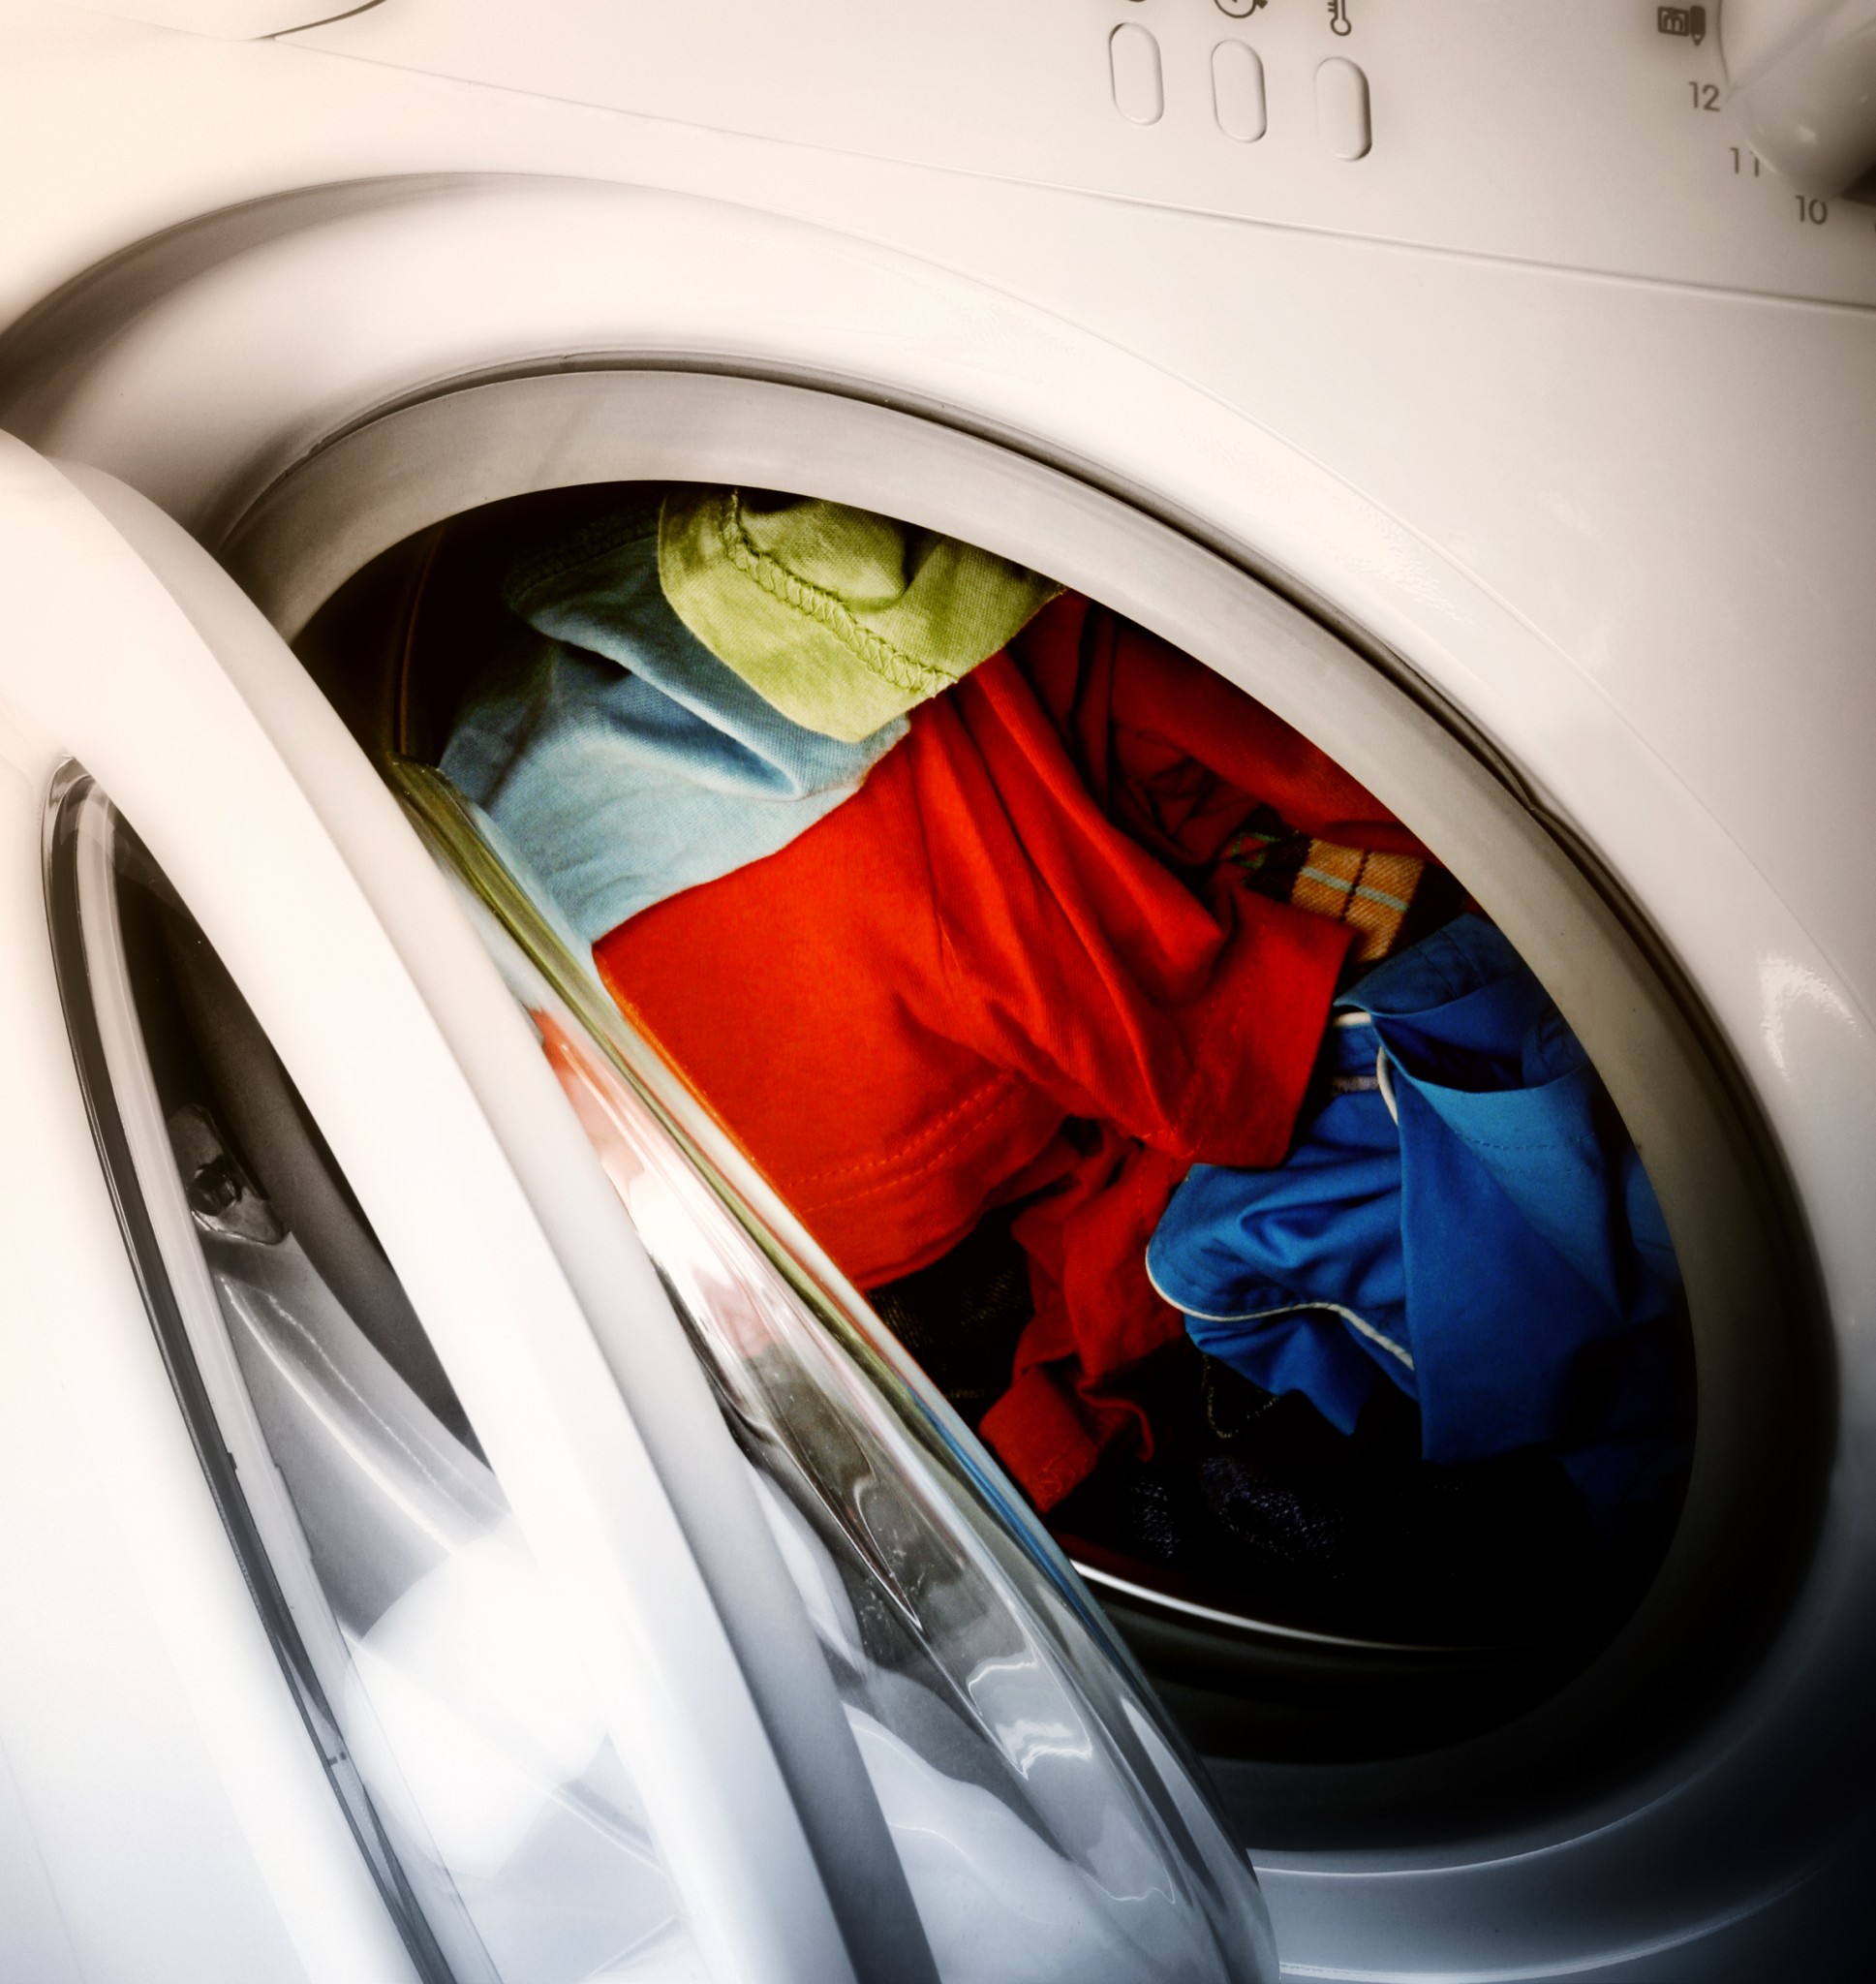 Our Weekly Economic News Roundup and washing machine tariffs